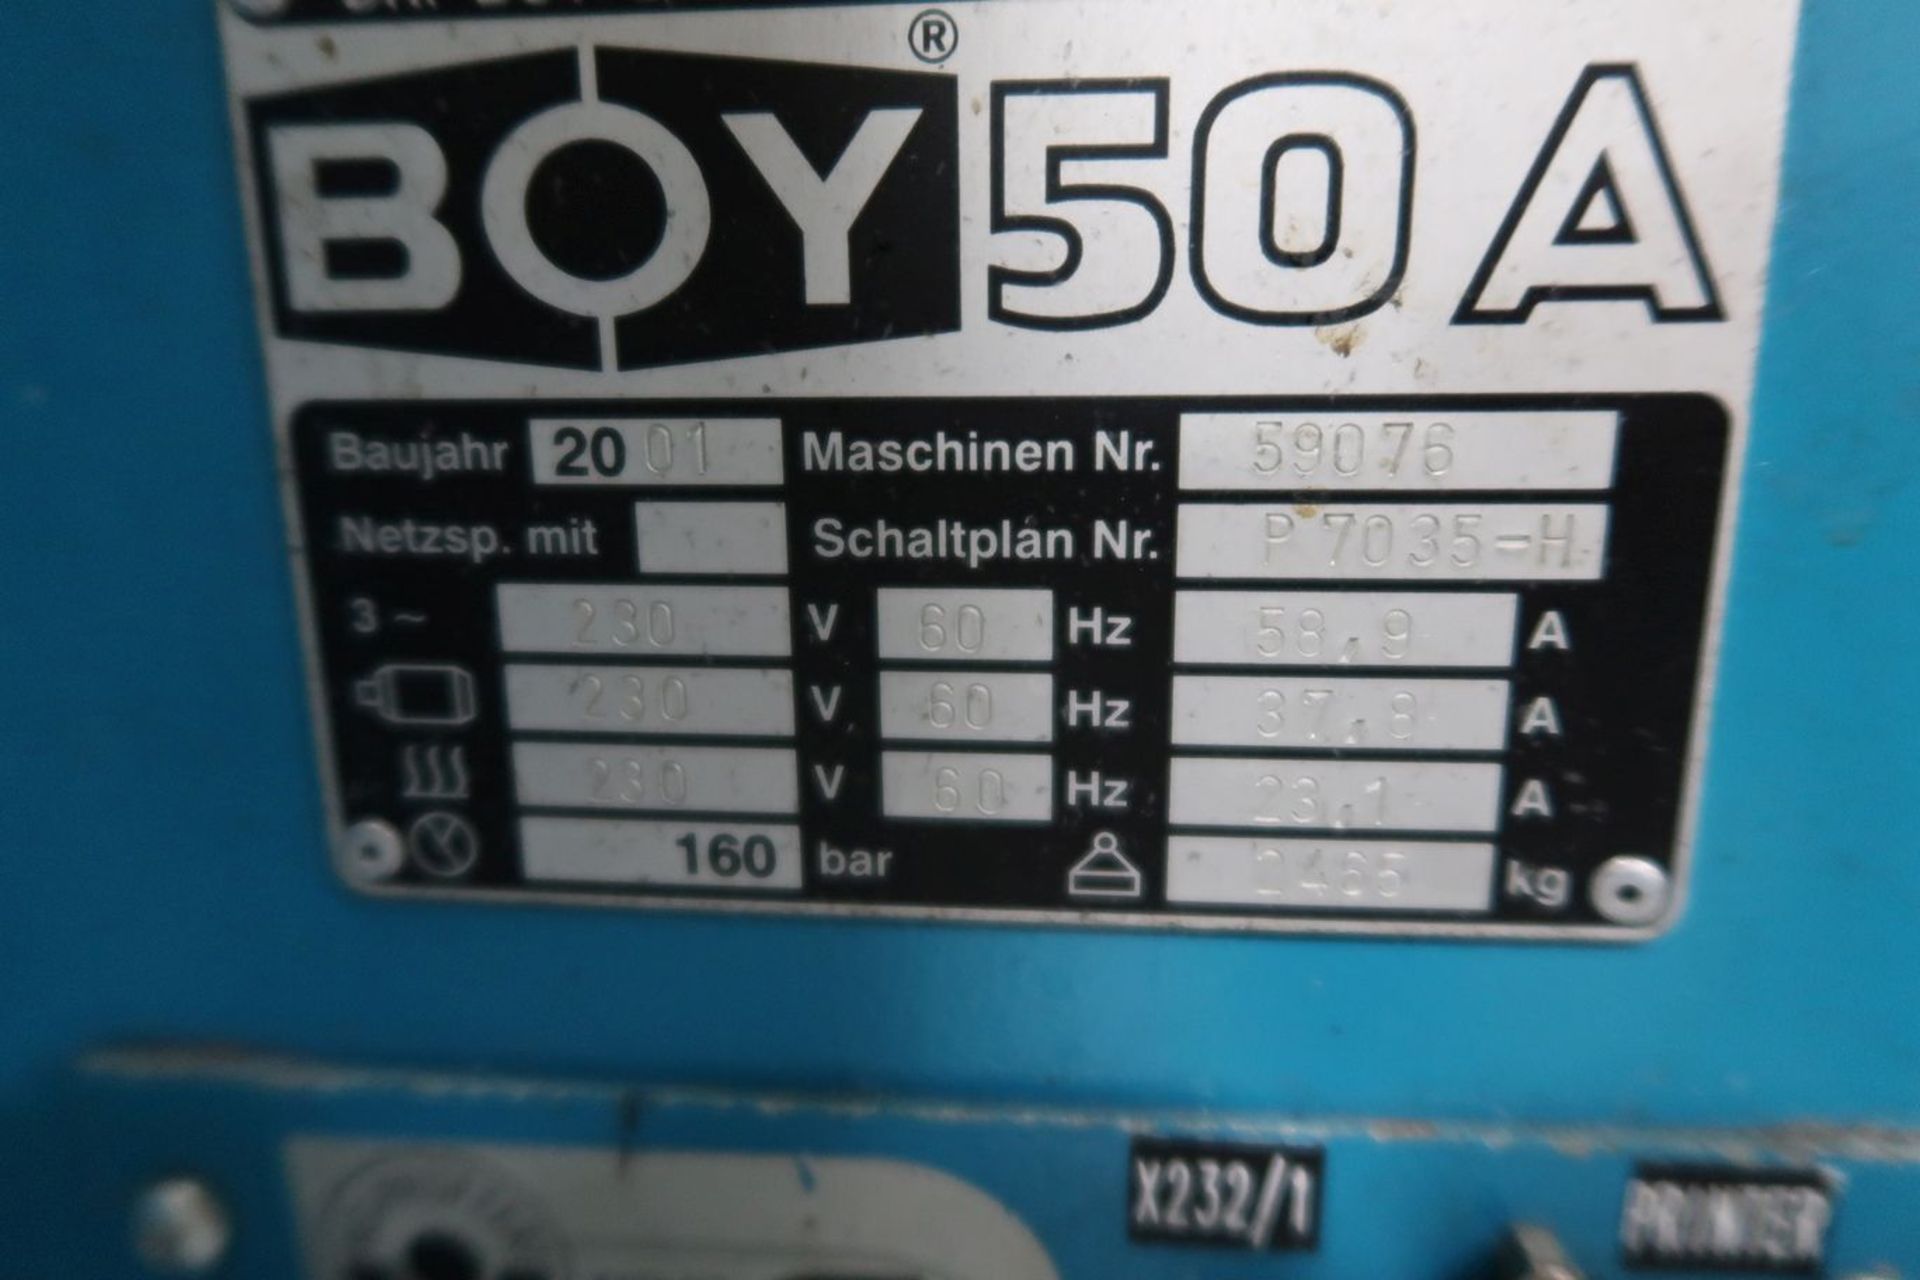 55-TON X 2.32-OZ. BOY MODEL 50A PLASTIC INJECTION MOLDING MACHINE; S/N 59076 (2002) - Image 15 of 15